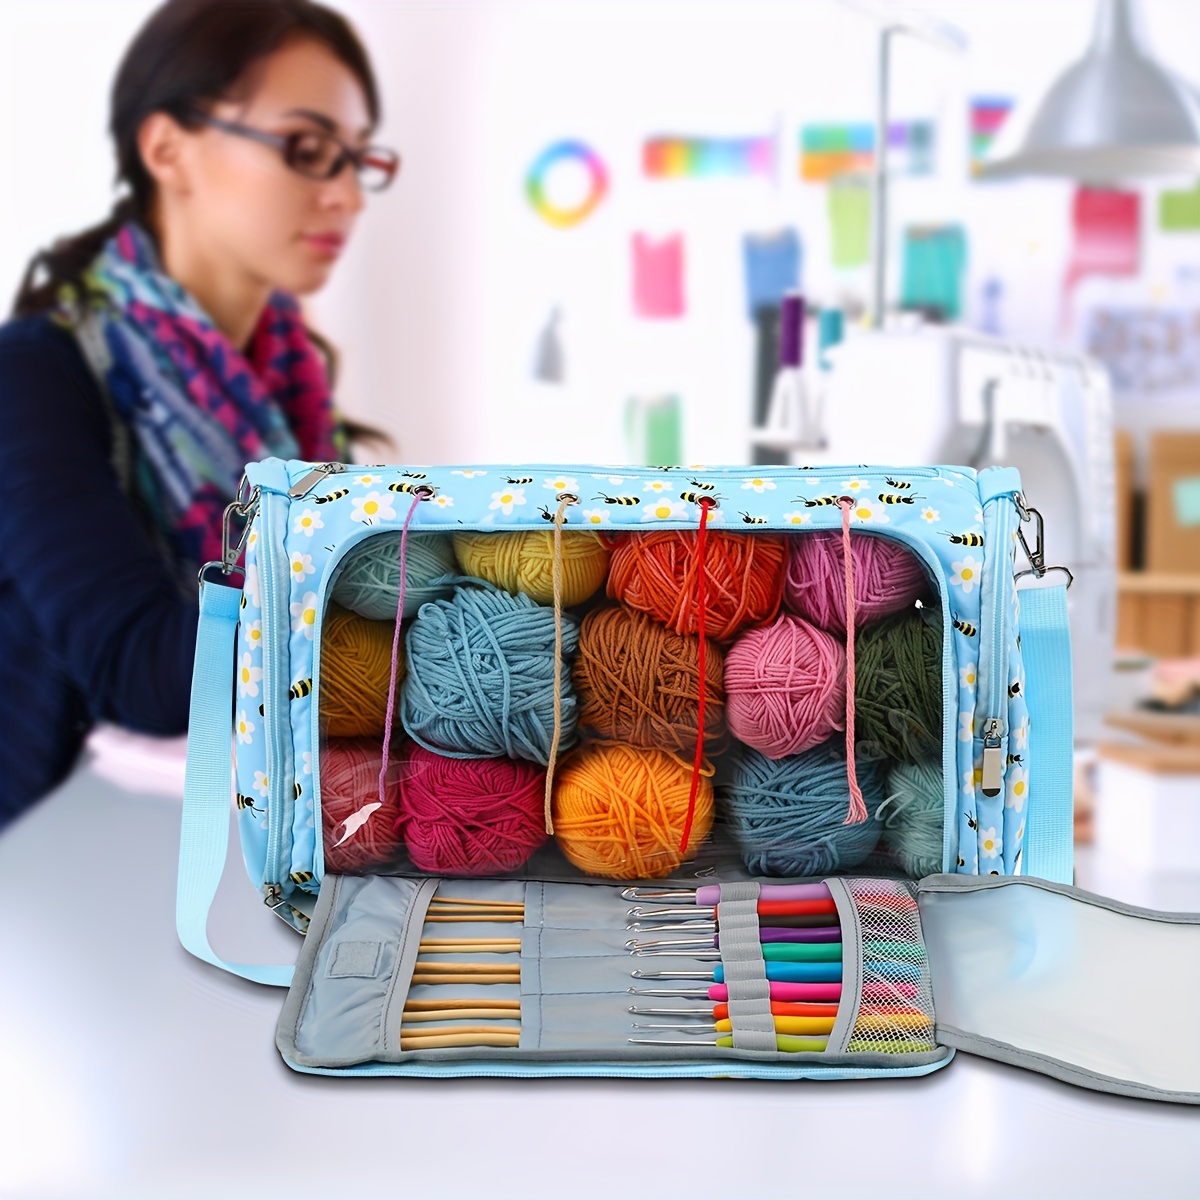 Sewing Supplies Organizer Bag, Double-Layer Sewing Box Organizer